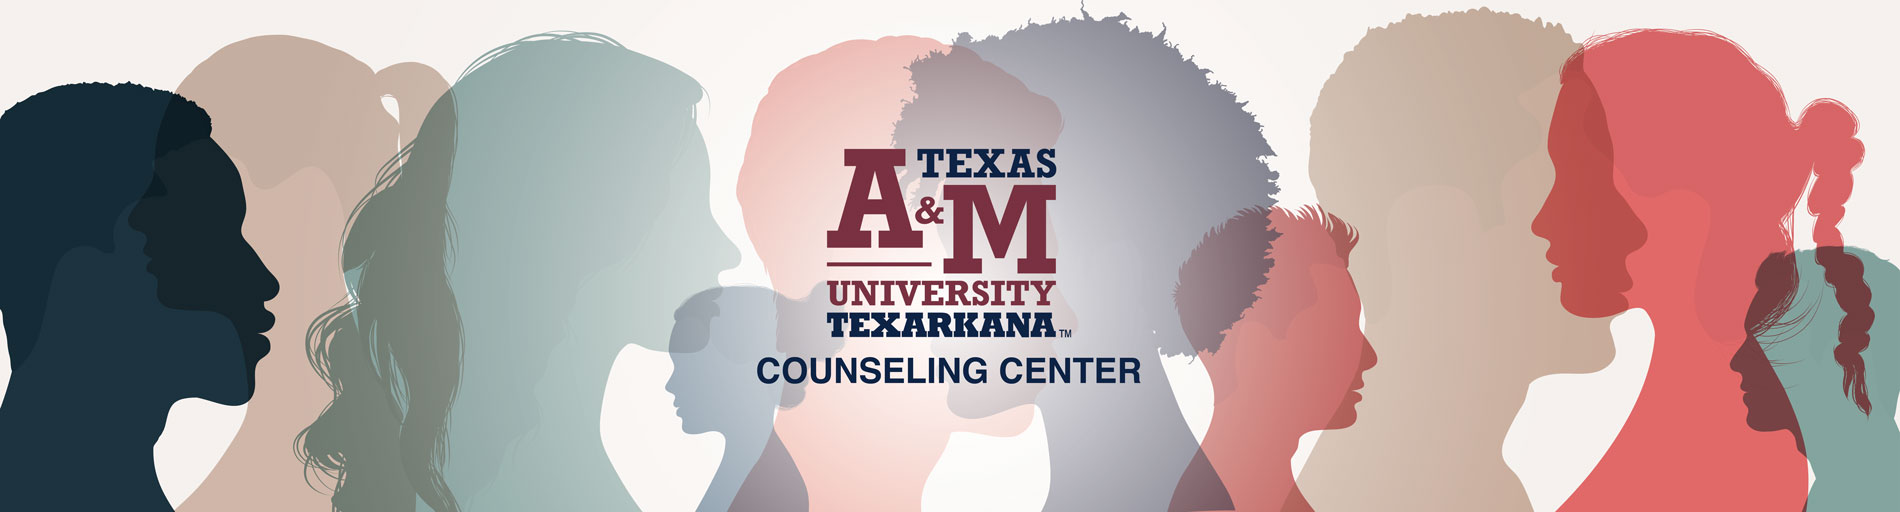 Counseling Center Logo